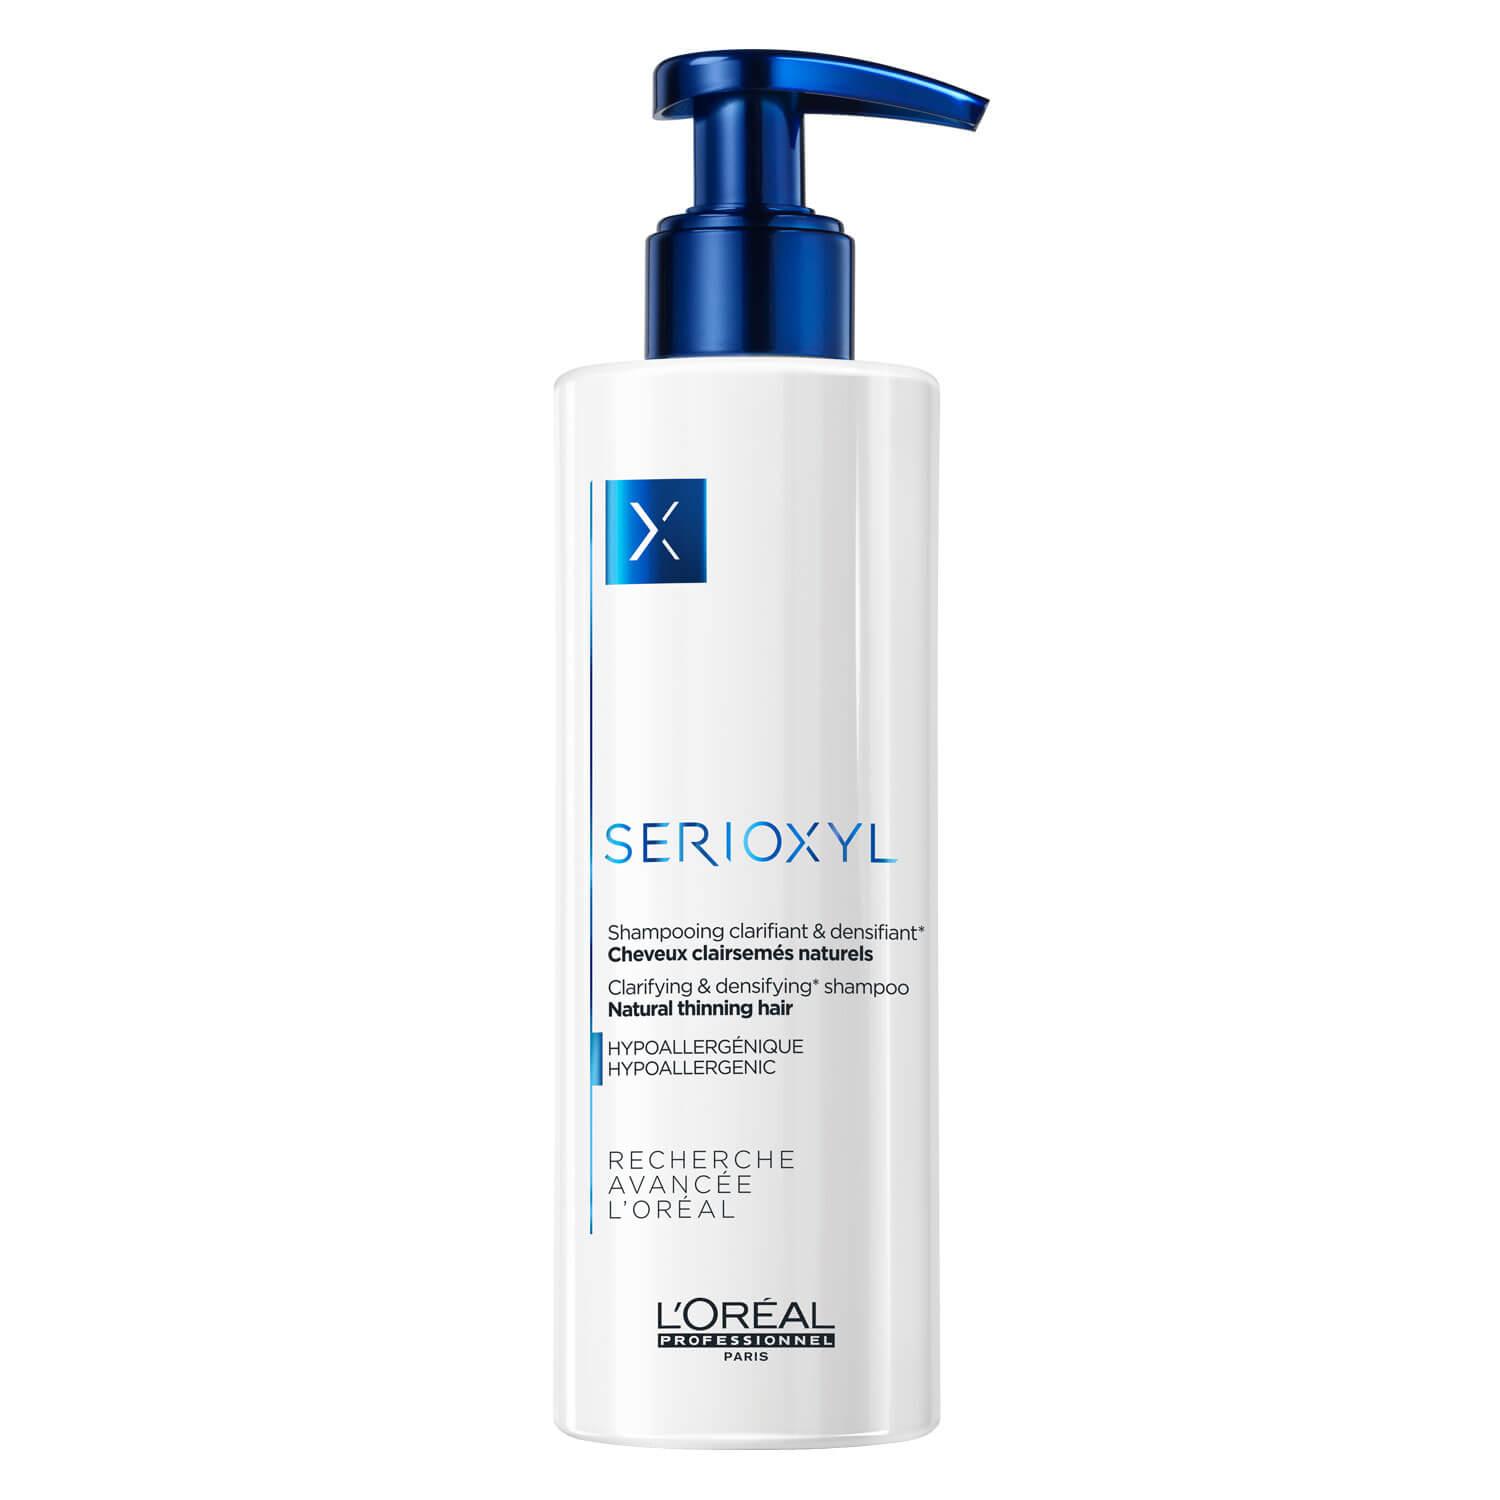 Serioxyl - Shampoo for Natural Thinning Hair